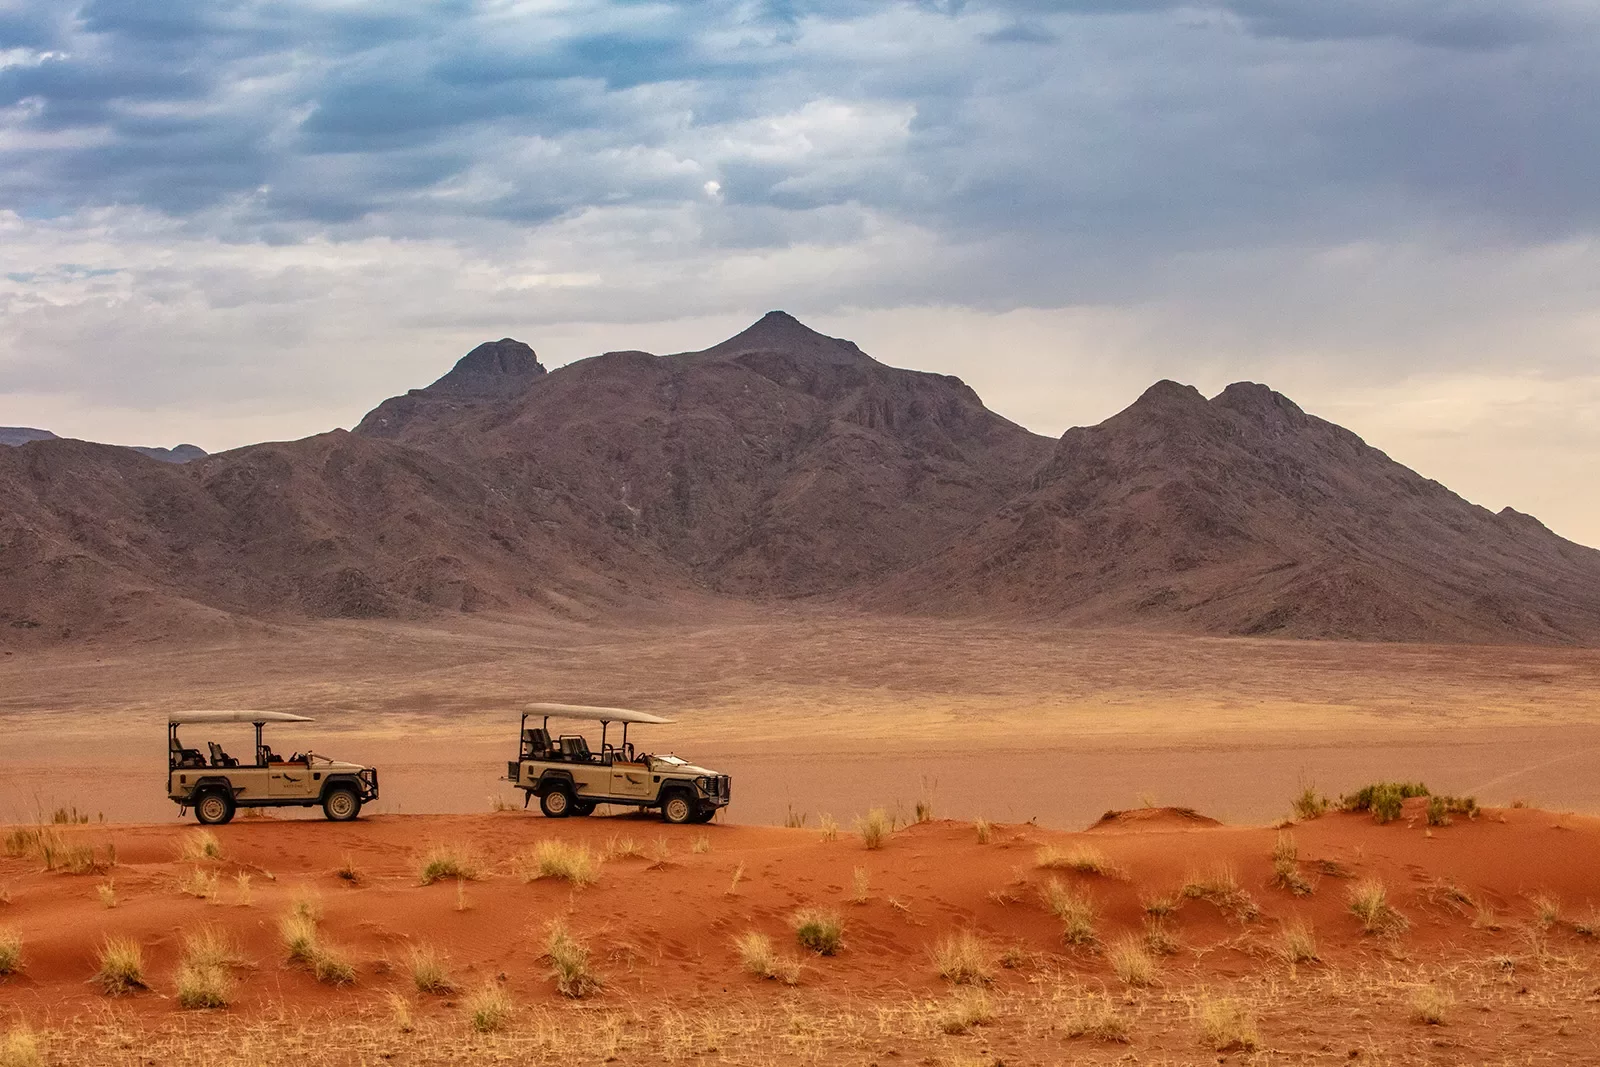 Jeeps on safari in Africa